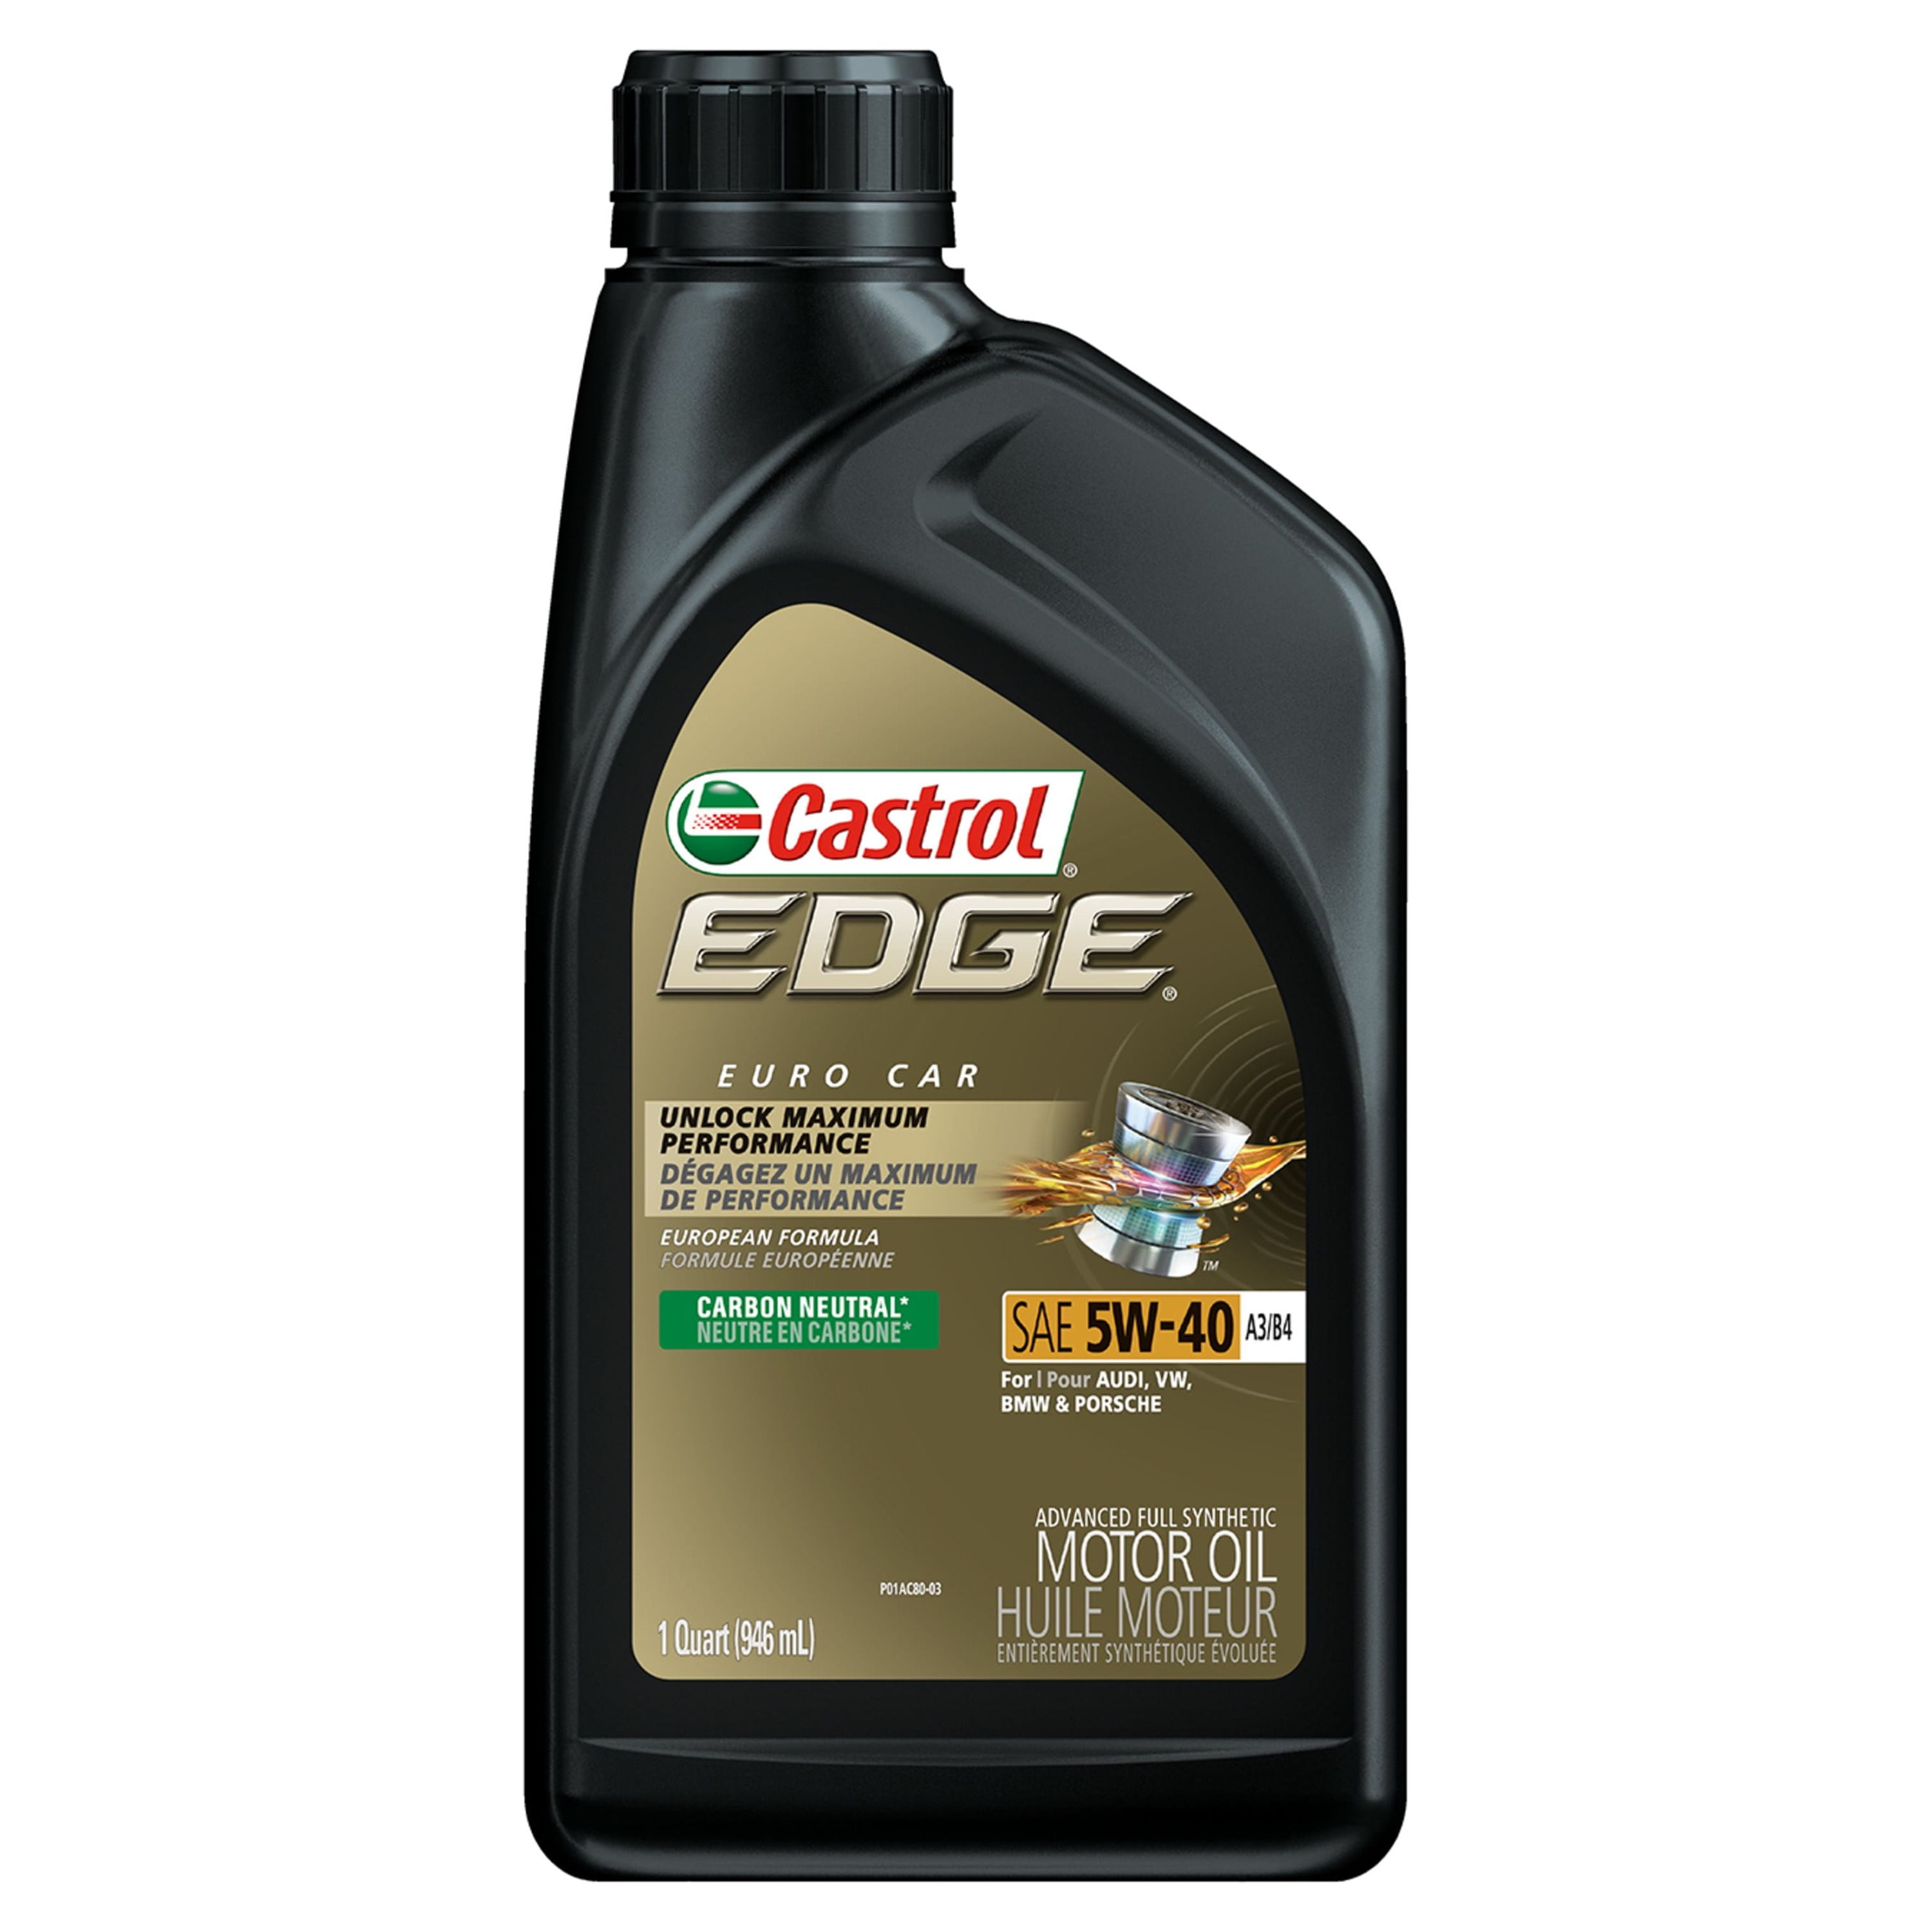 Castrol Edge vs Edge Euro Car 5W40 – same product, new label? : r/GolfGTI